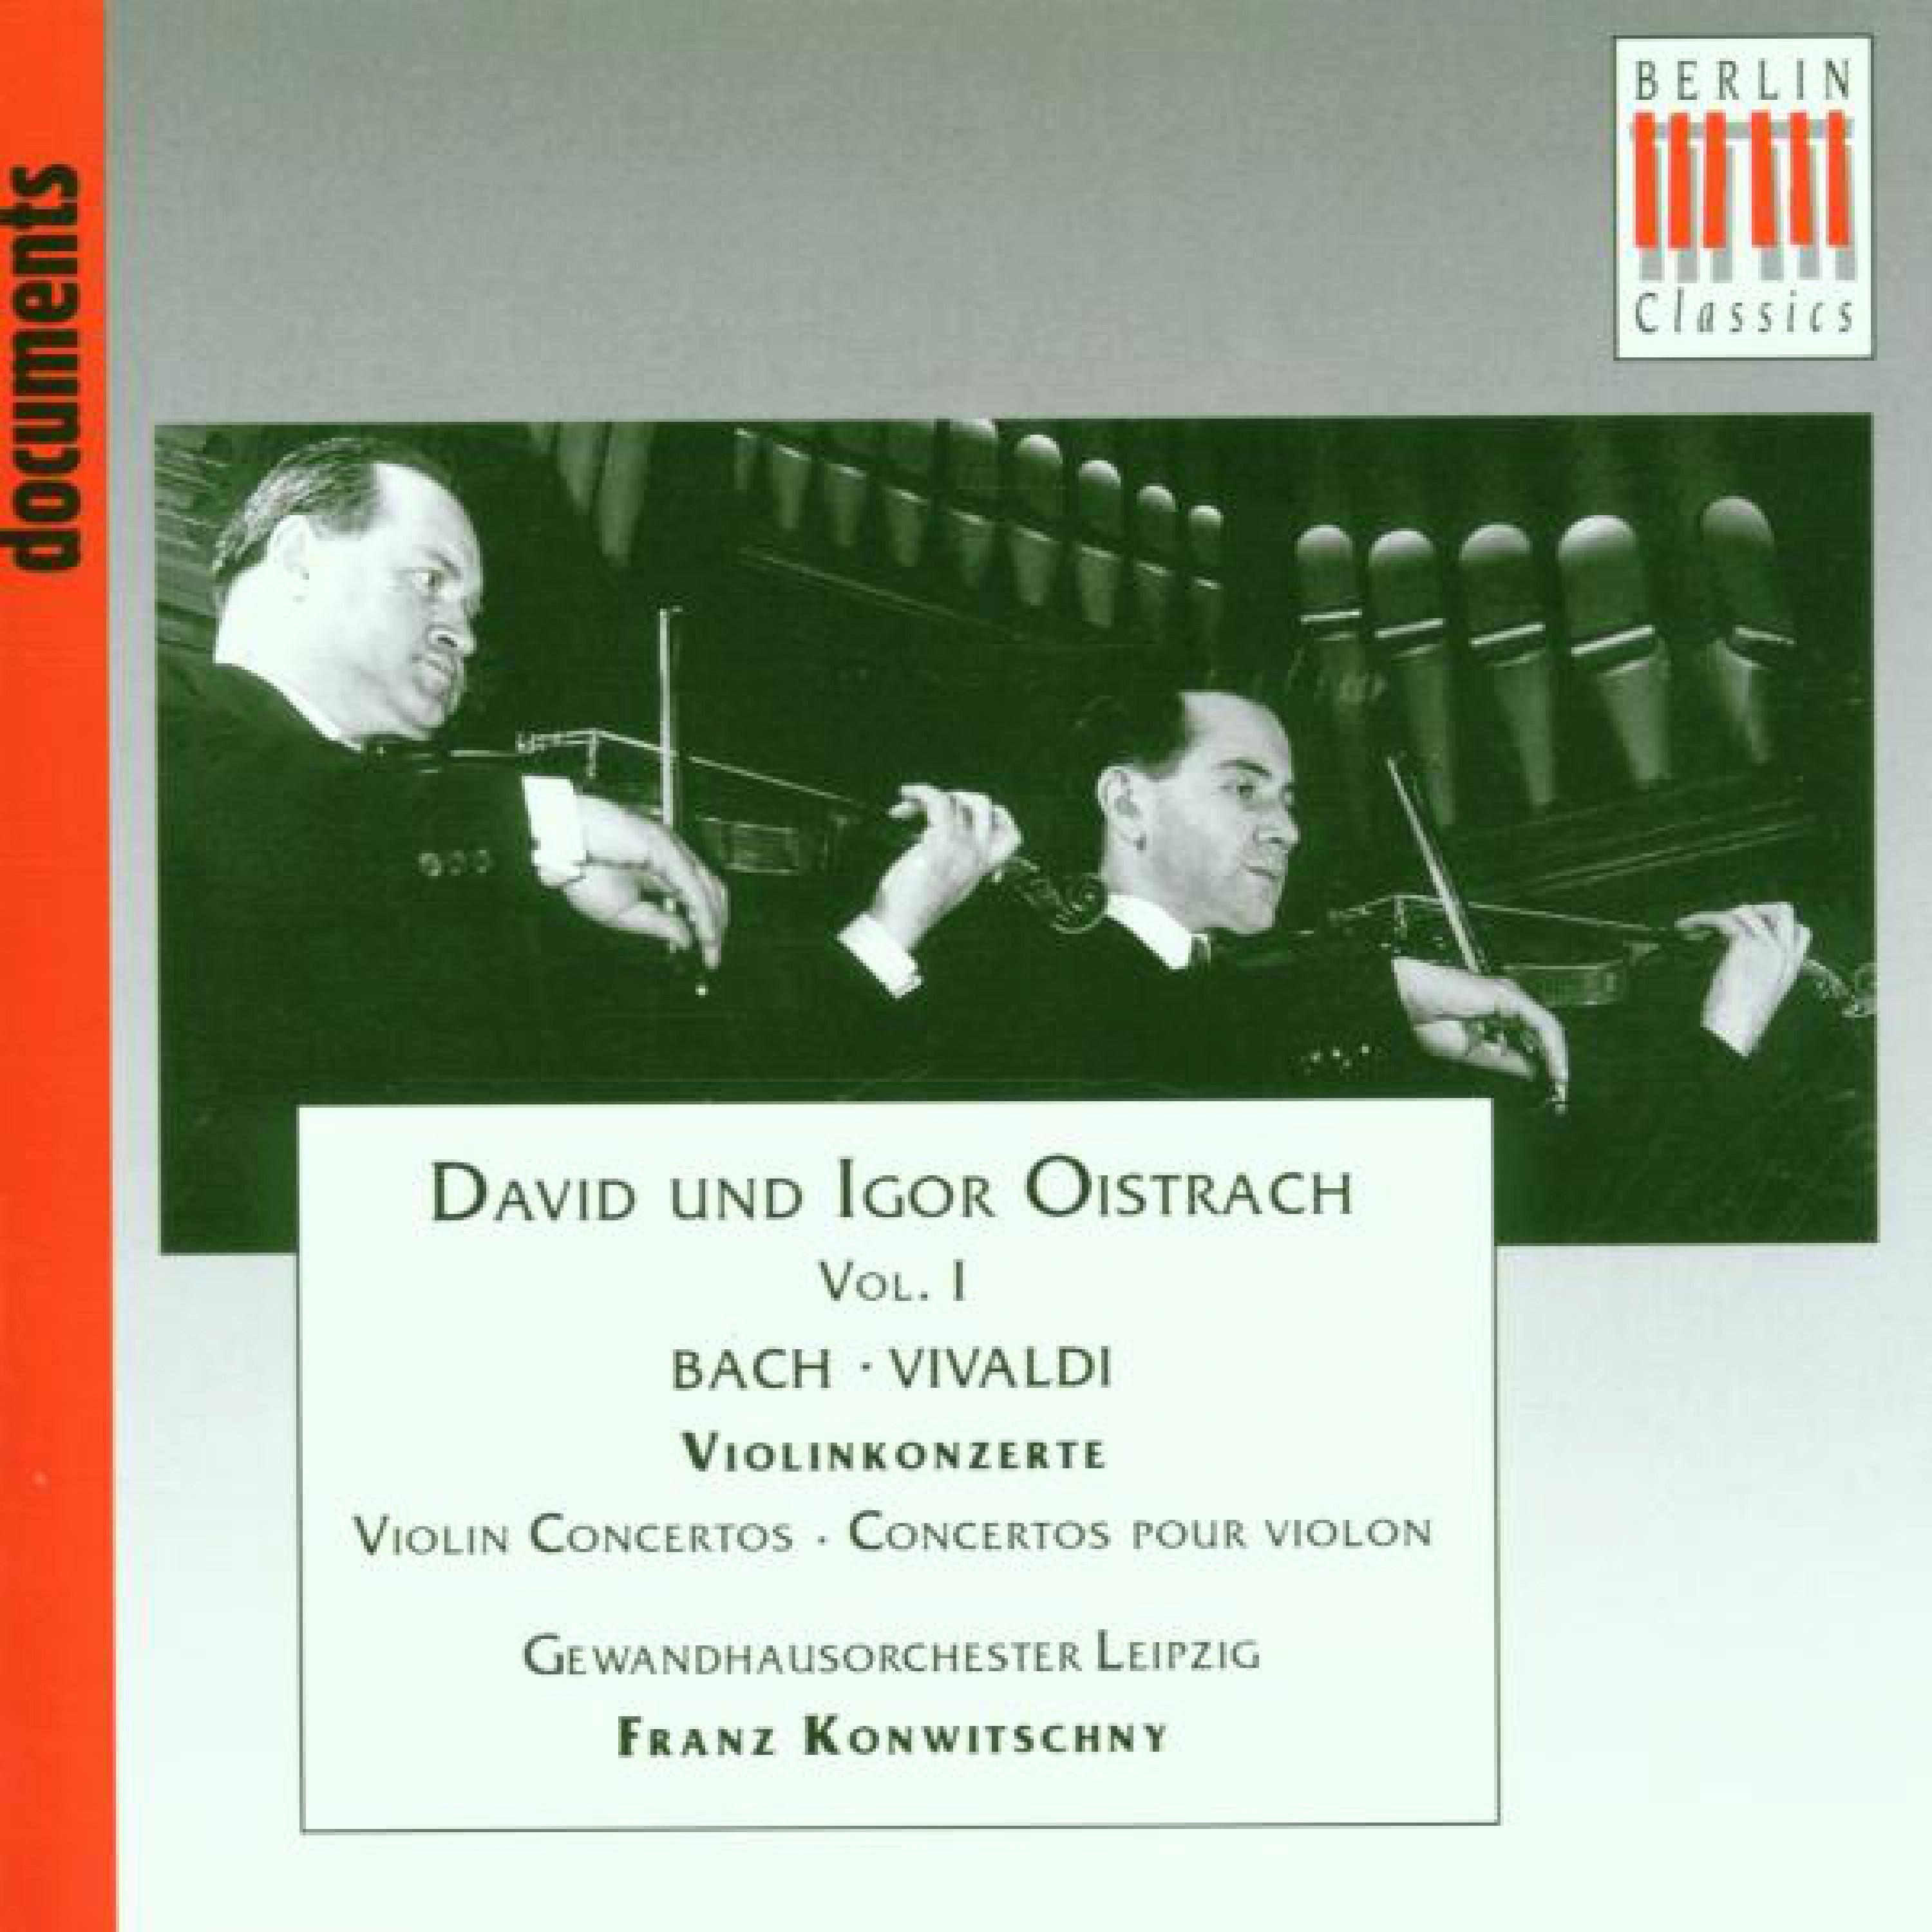 Concerto grosso for 2 Violins & Strings, Op. 3, No. 8 in A Minor, RV 522: I. Allegro